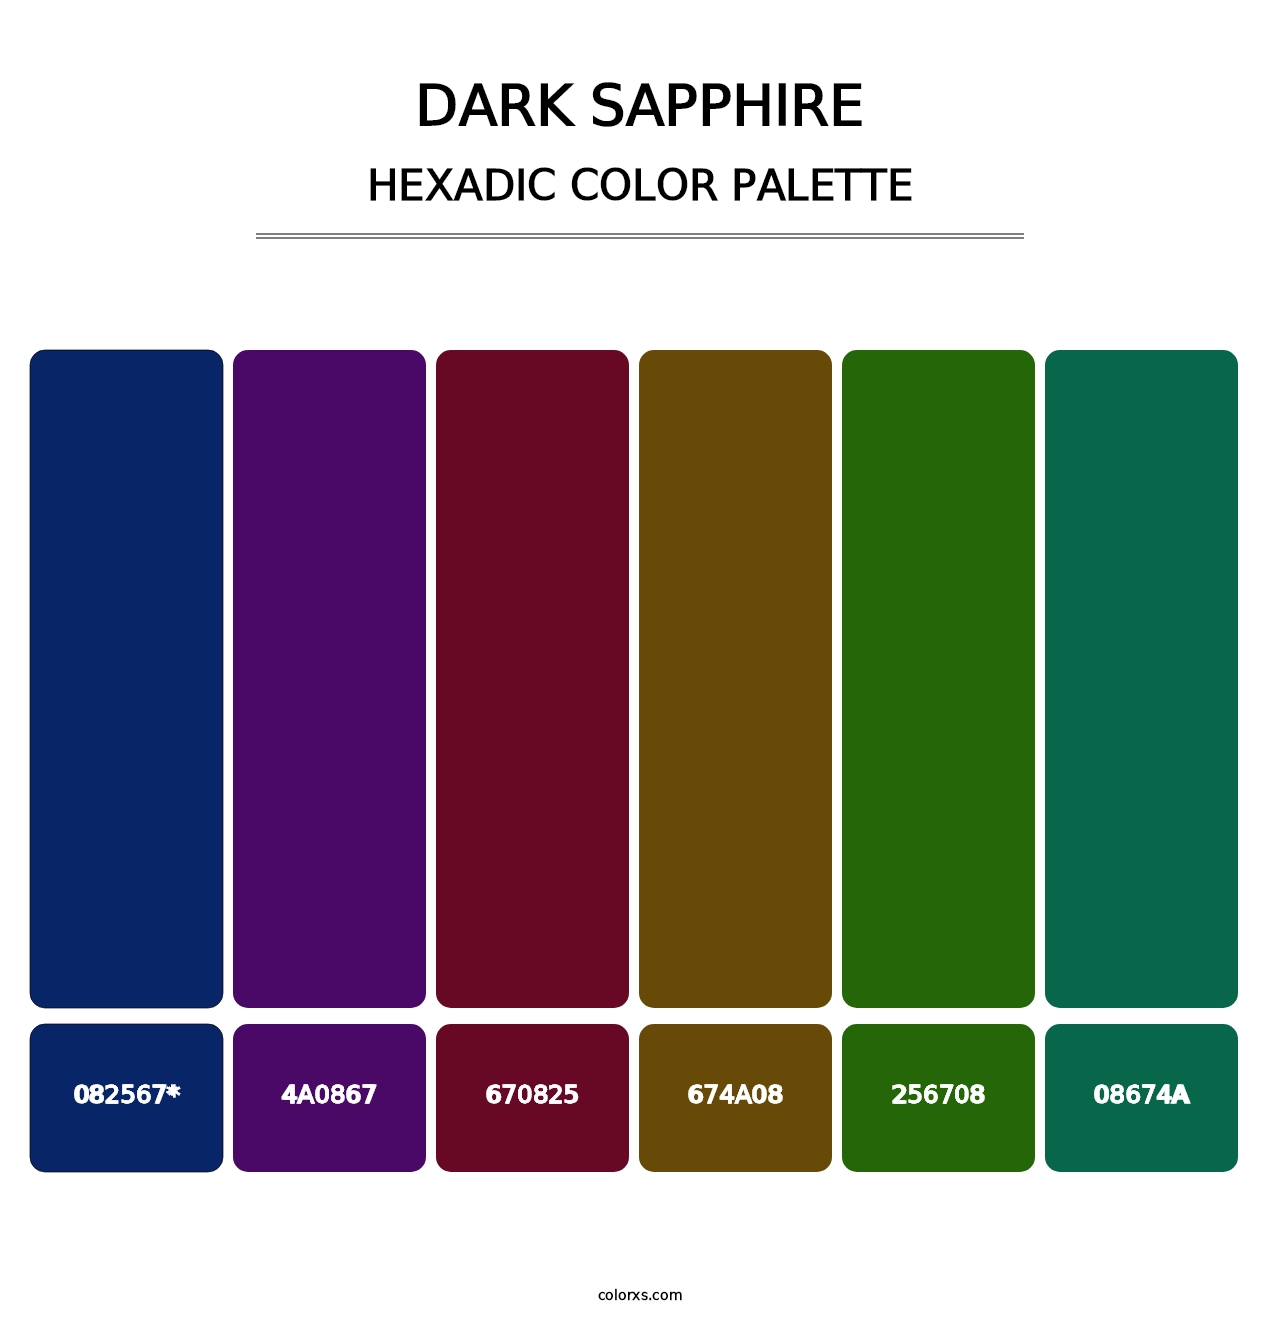 Dark Sapphire - Hexadic Color Palette